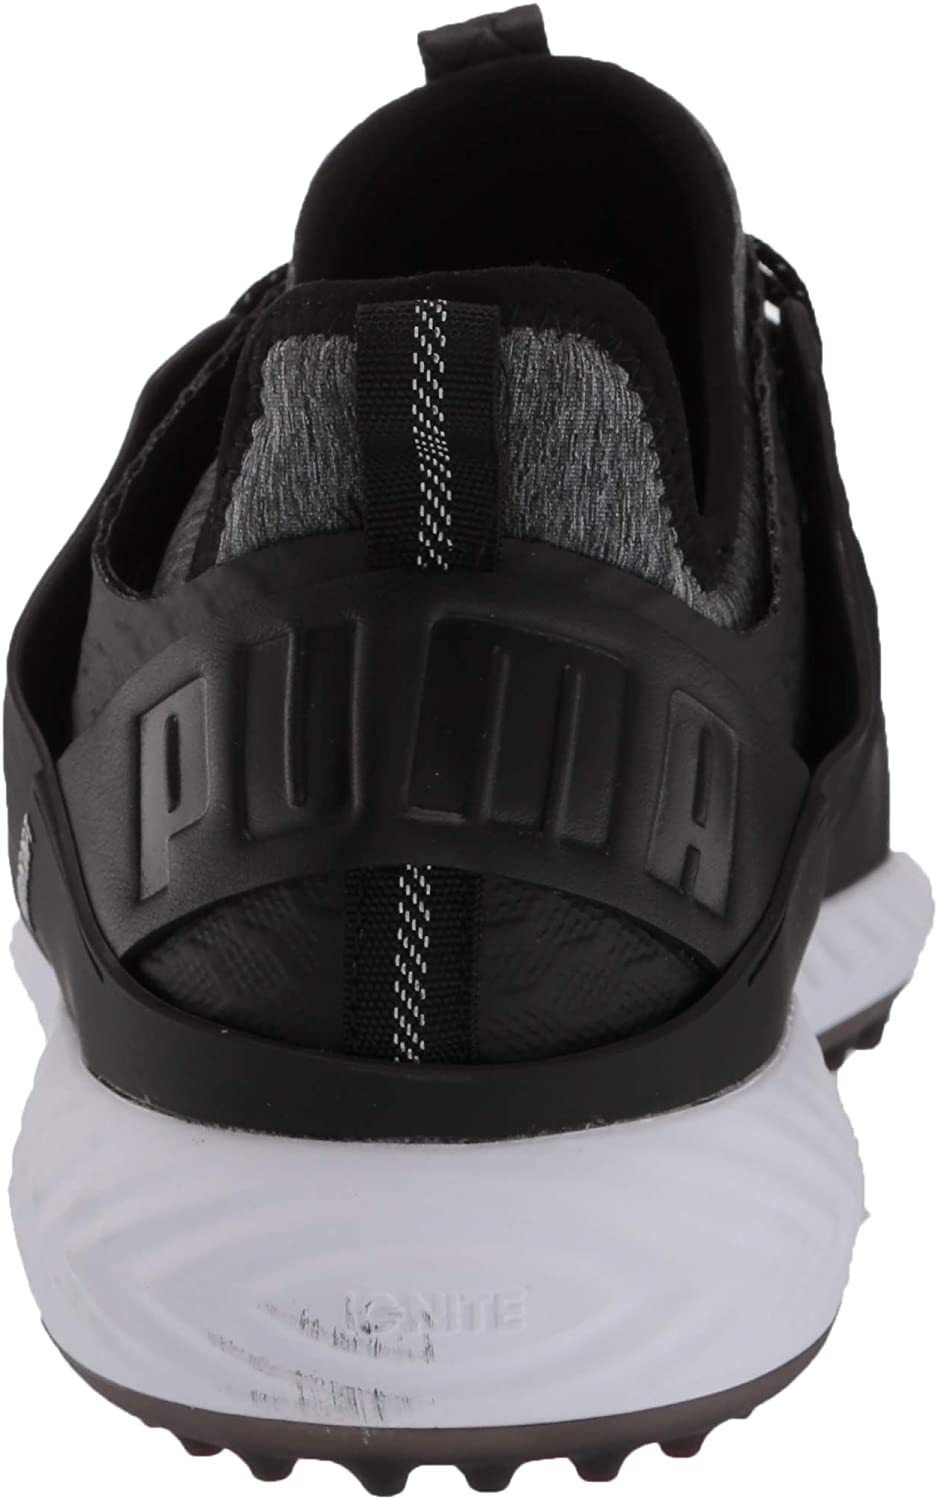 Puma IGNITE PWRADAPT Caged Golf Shoes PUMA Black/PUMA Silver/PUMA White 12.5 Medium - image 3 of 7